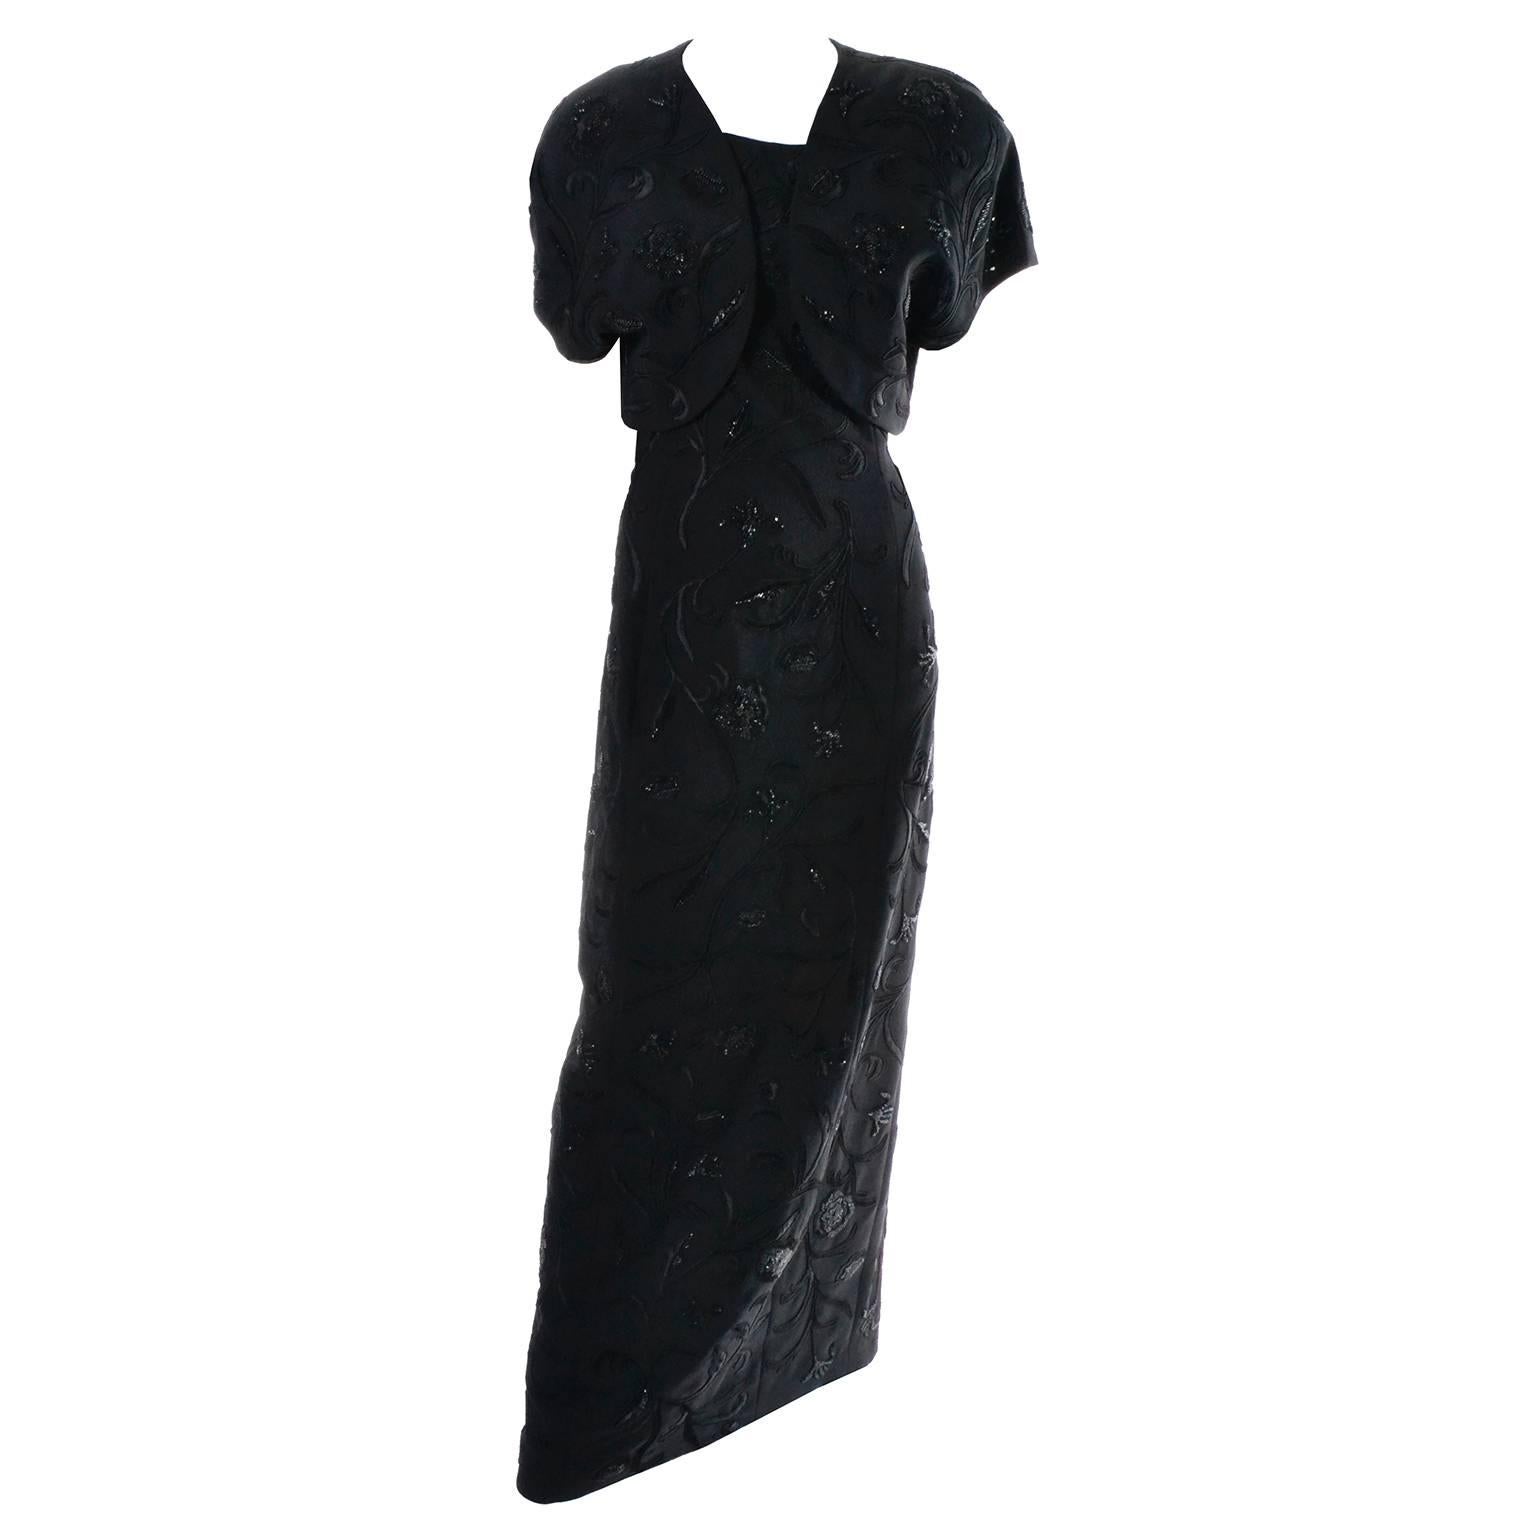 Black Carmen Marc Valvo 1990s Vintage Dress Beaded Evening Gown and Bolero Jacket 14